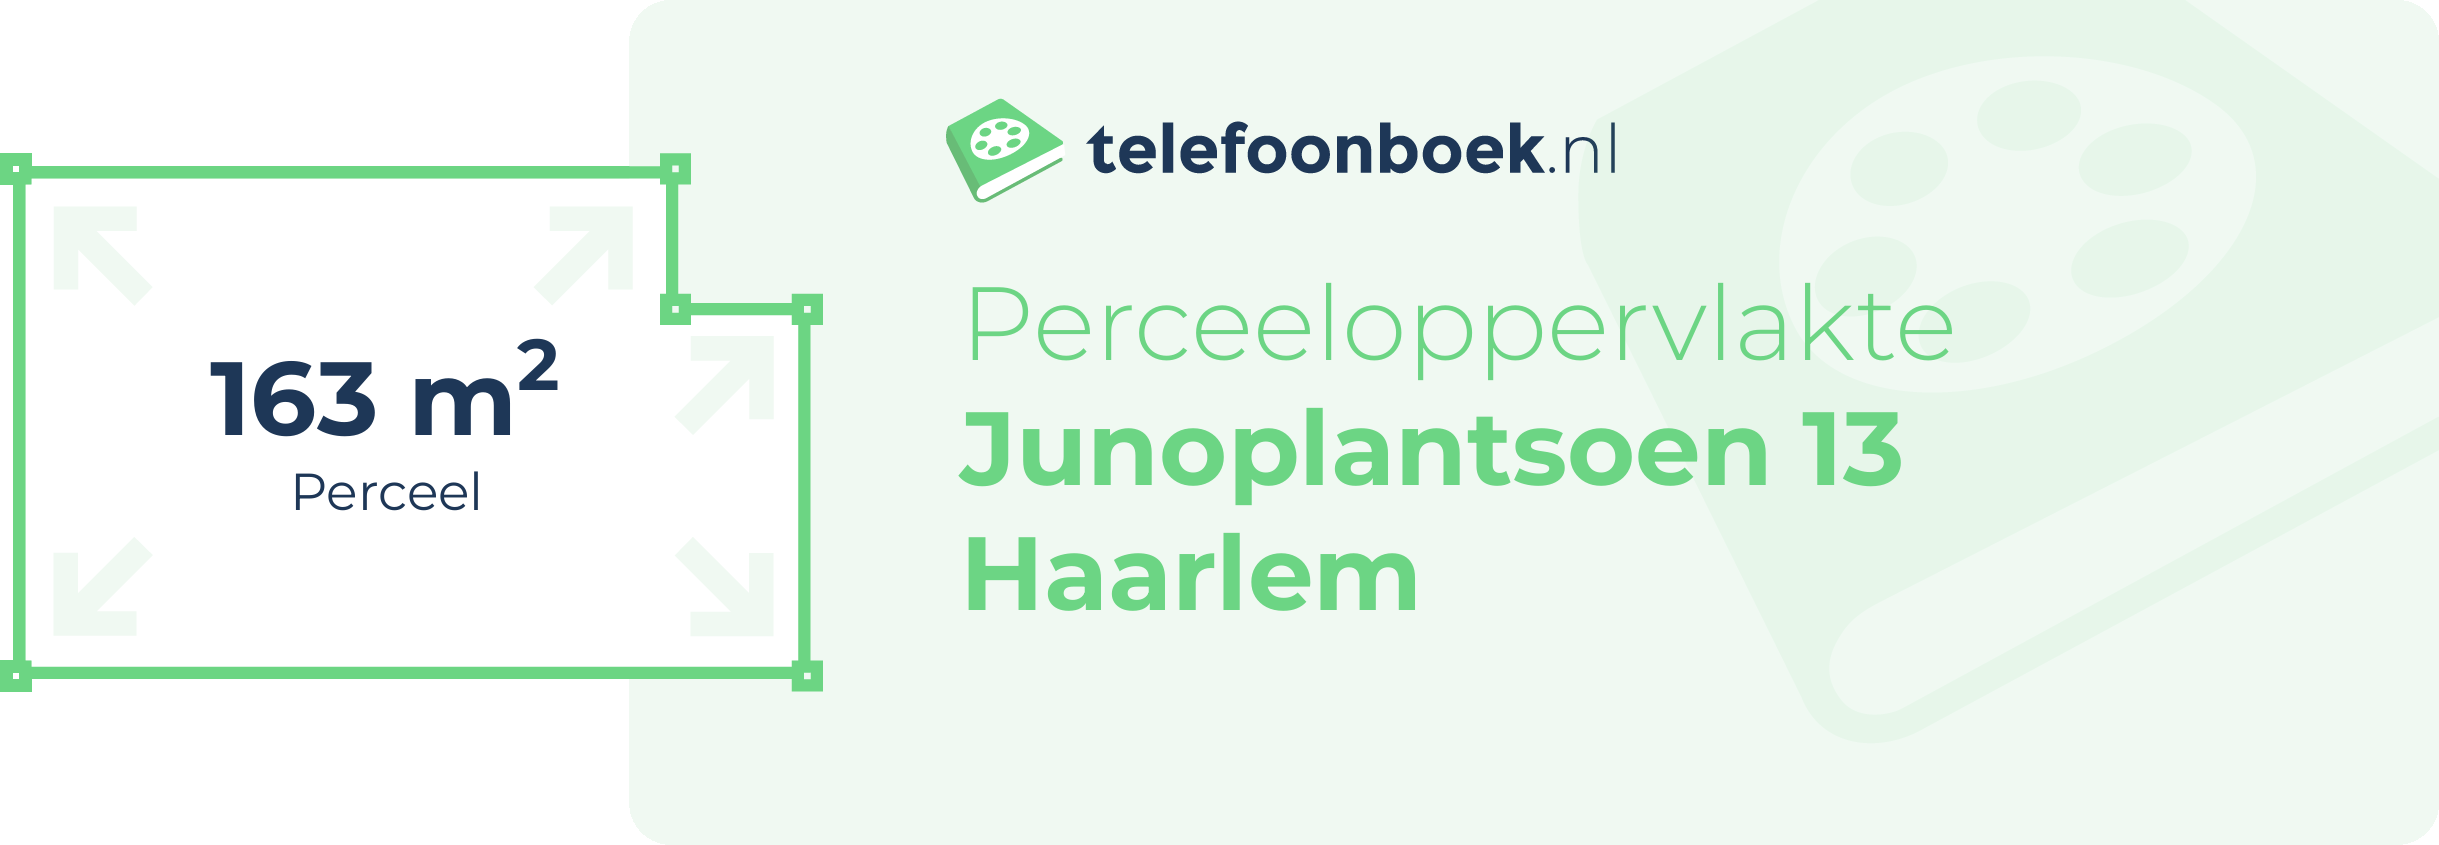 Perceeloppervlakte Junoplantsoen 13 Haarlem